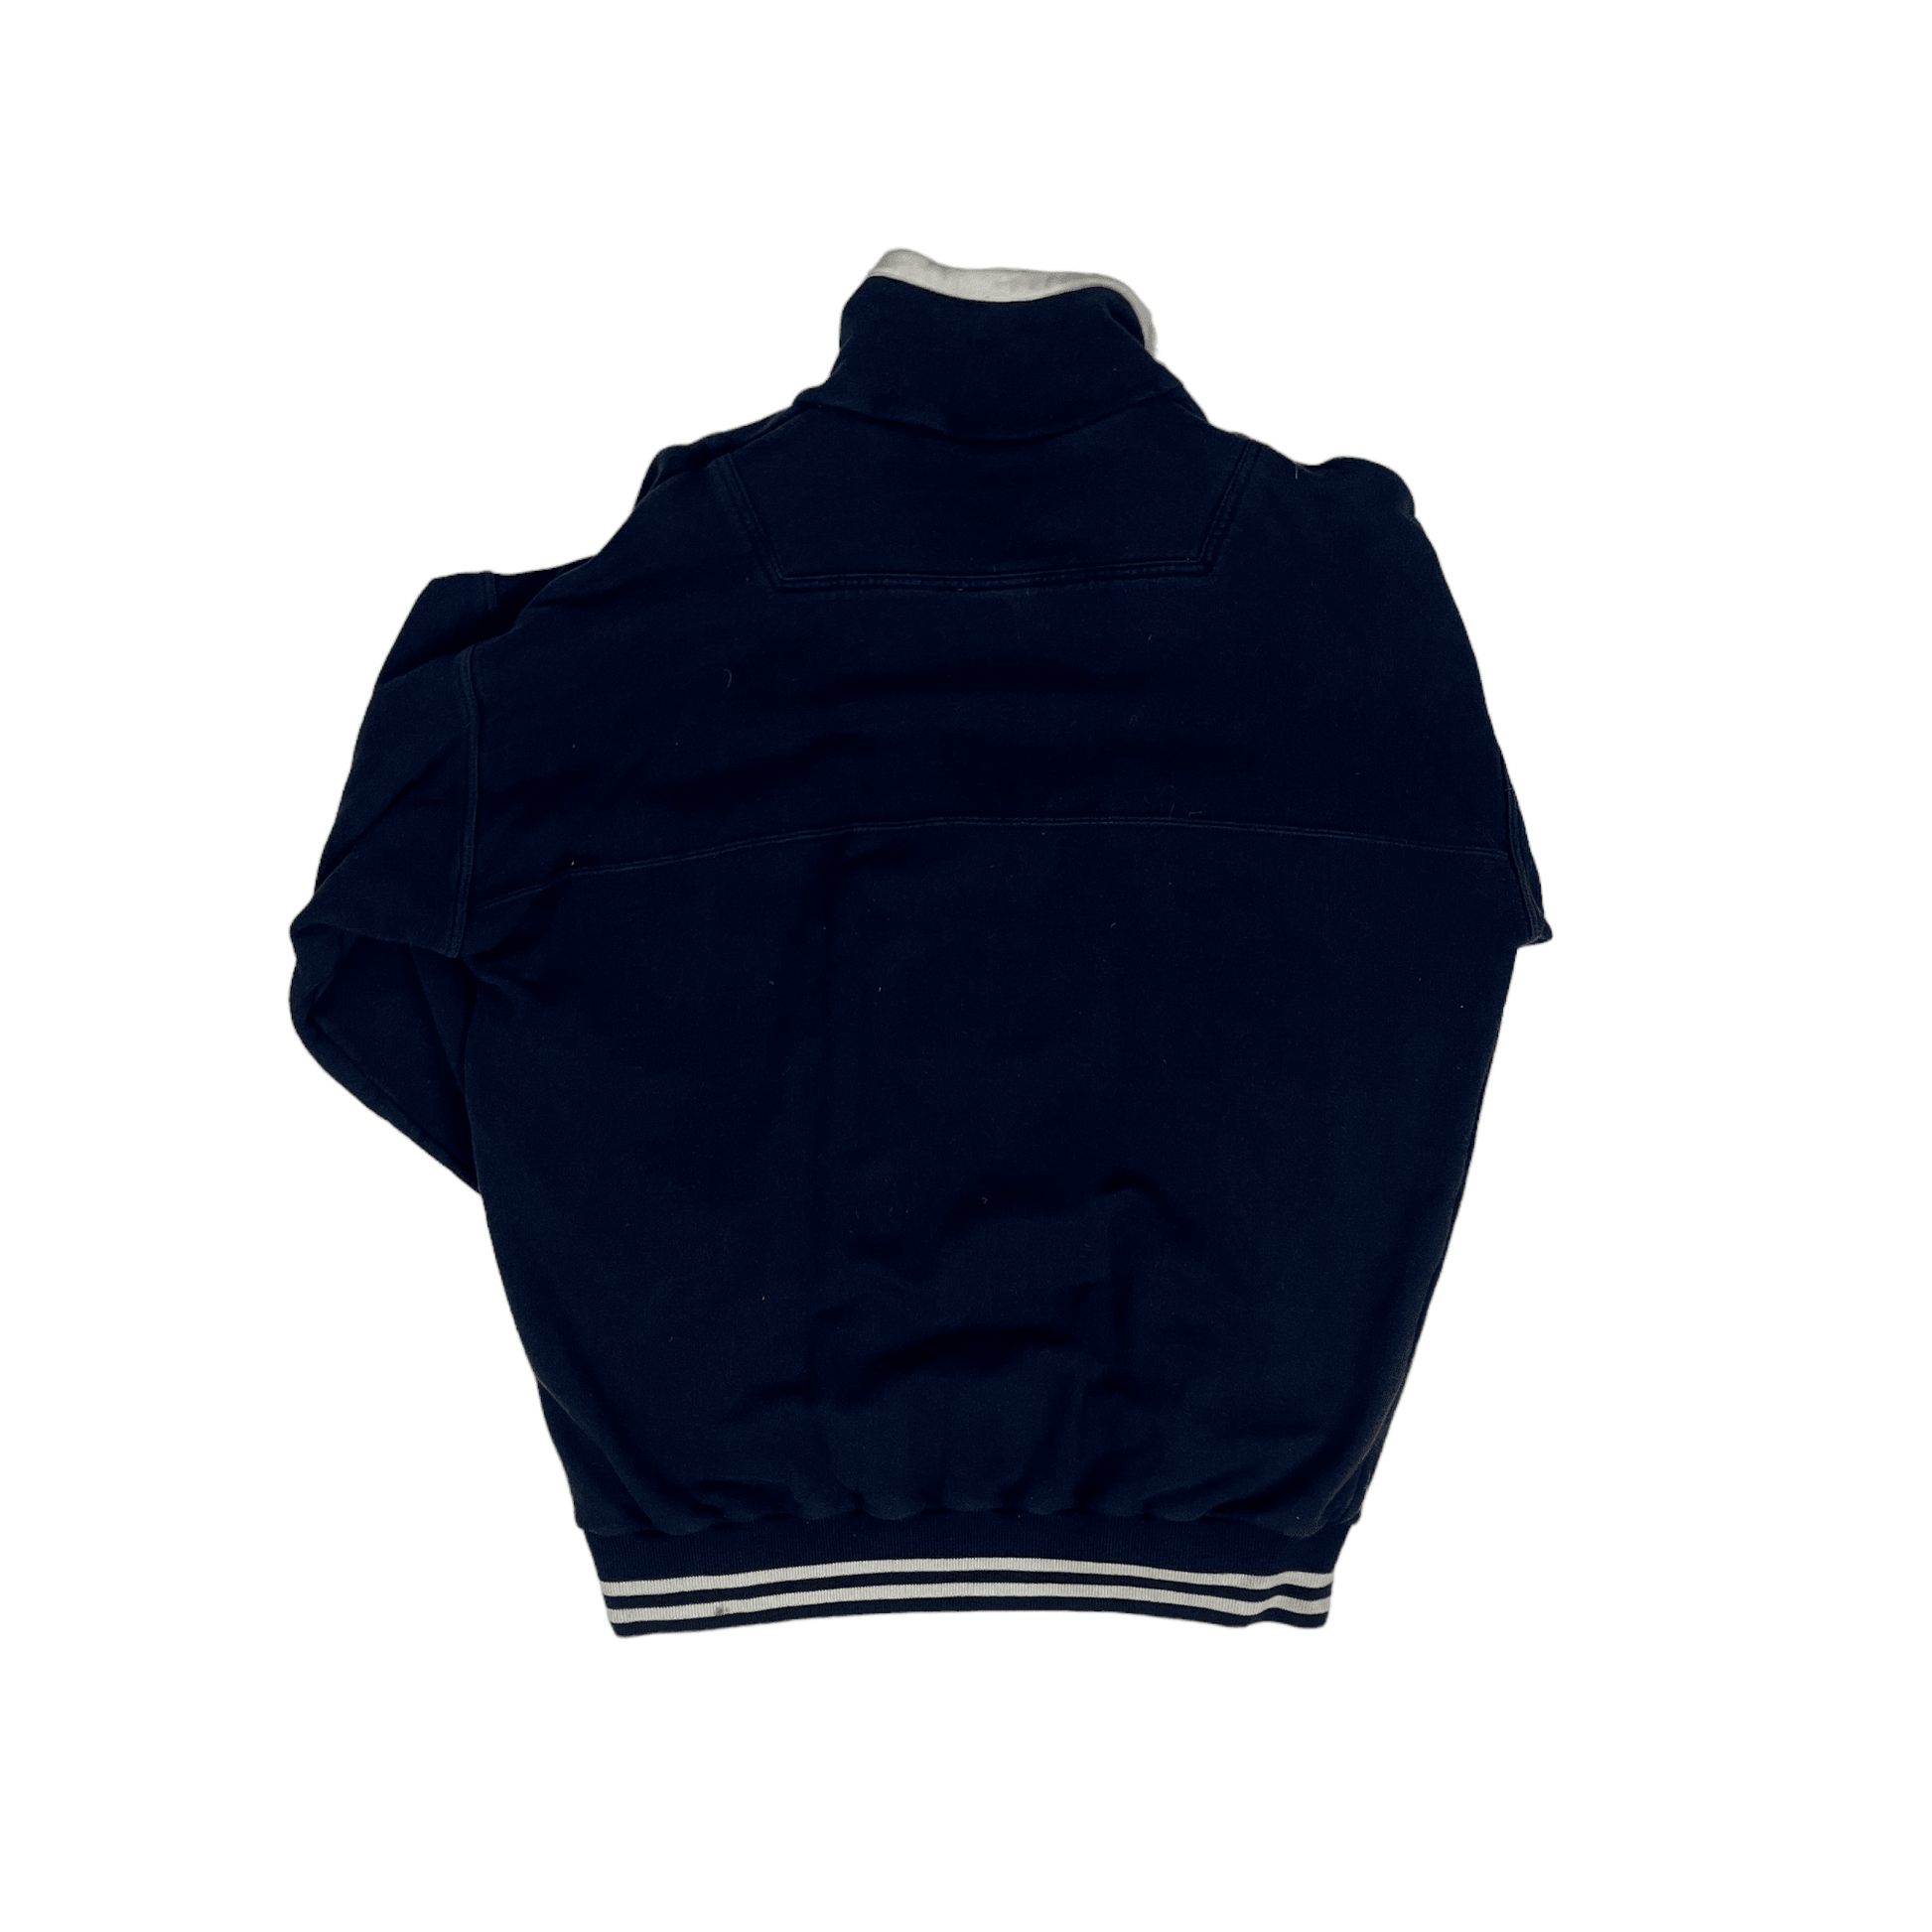 Vintage 90s Navy Blue Hugo Boss Yacht Club Sweatshirt - Medium (Recommended Size - Large) - The Streetwear Studio